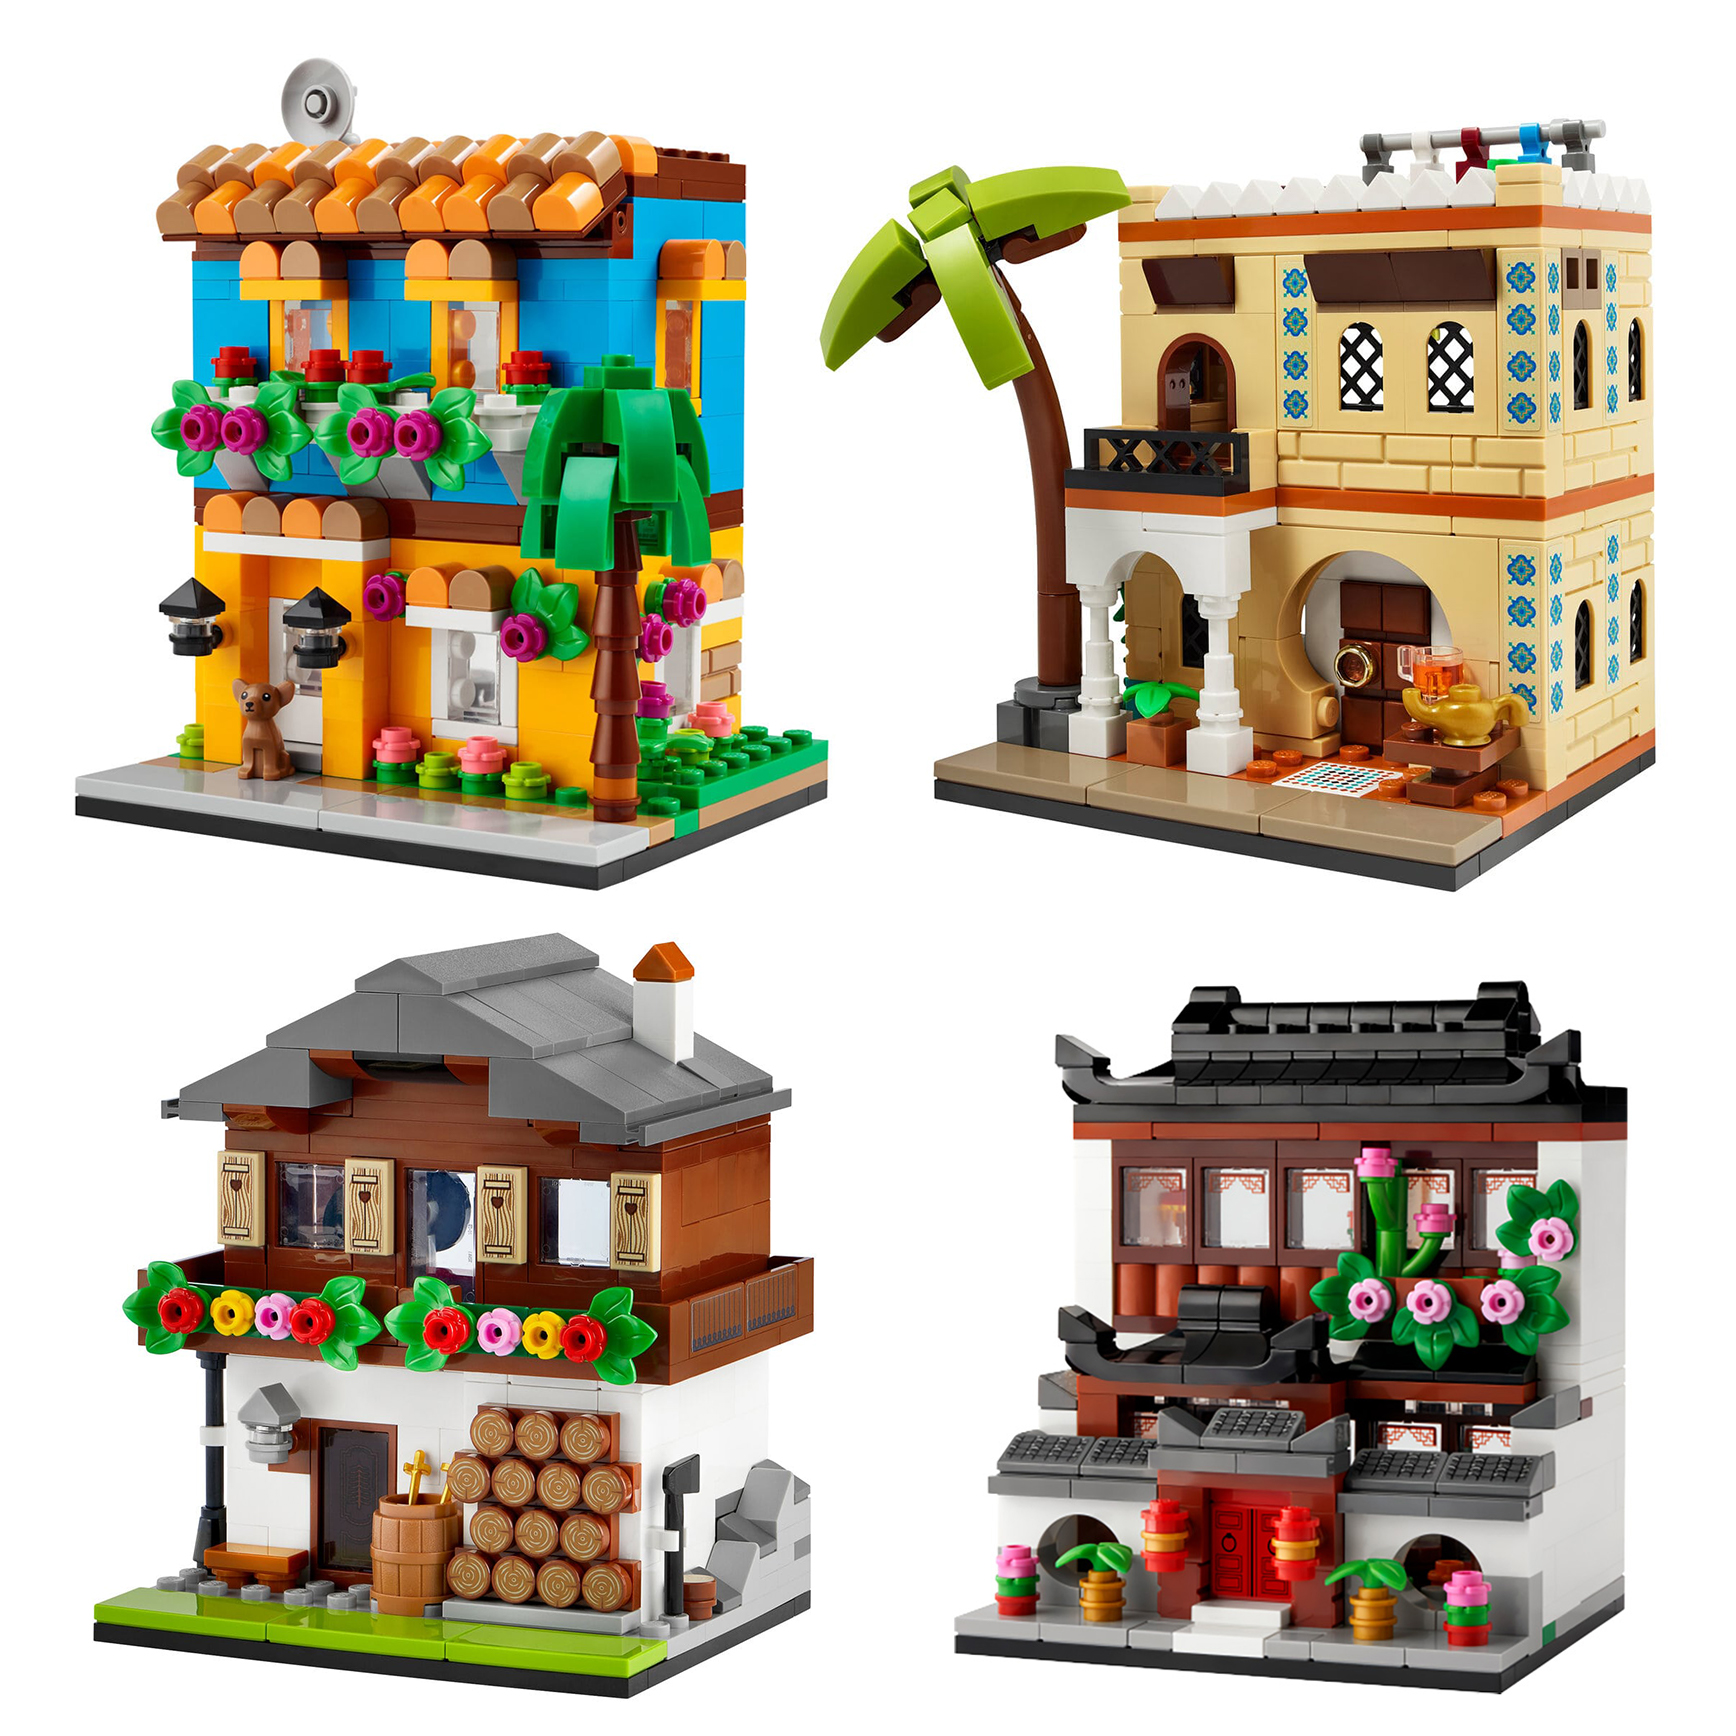 Sets - Boites LEGO® - LEGO® Set 40590 Maison du Monde 2 - La